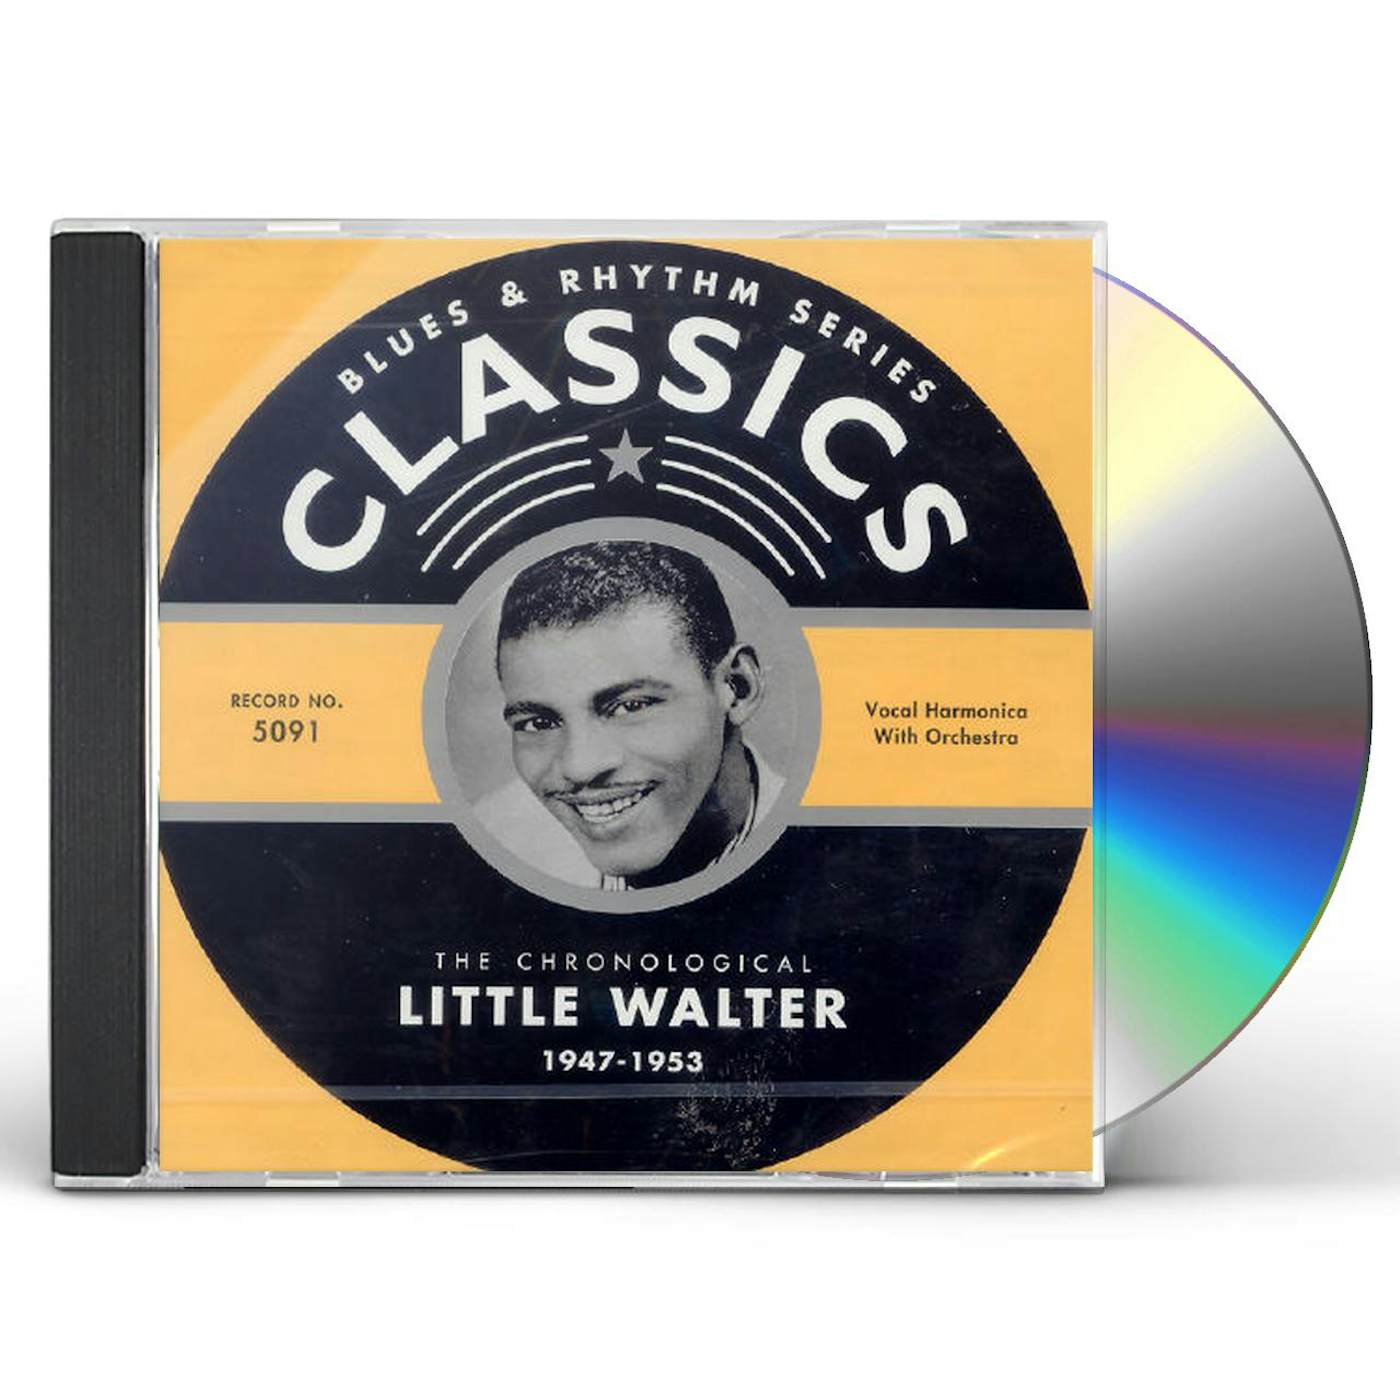 Little Walter 1947-1953 CD